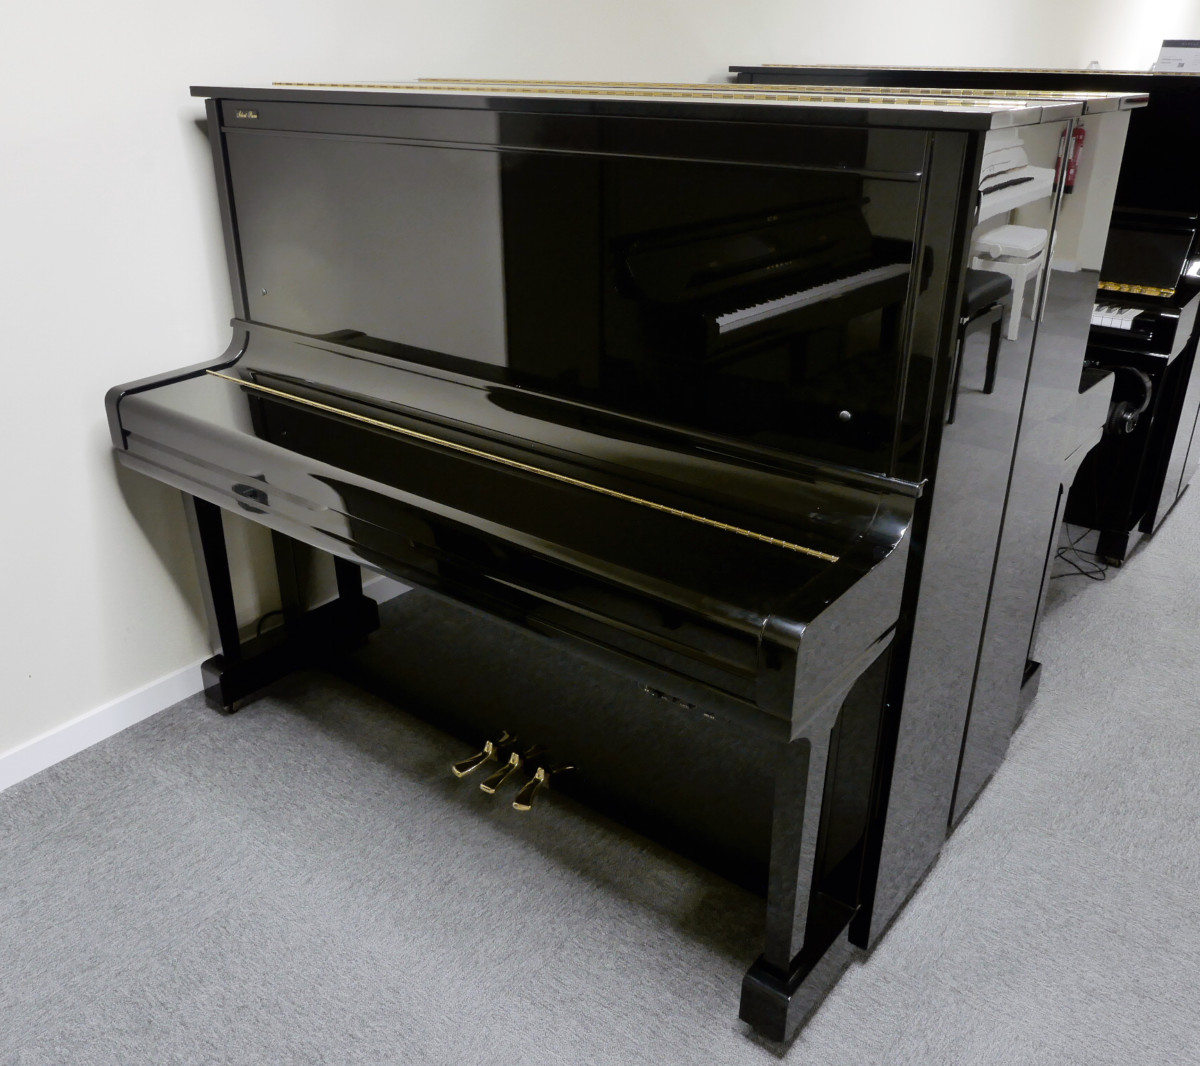 piano vertical Yamaha U300 silent #5353240 vista general tapa cerrada